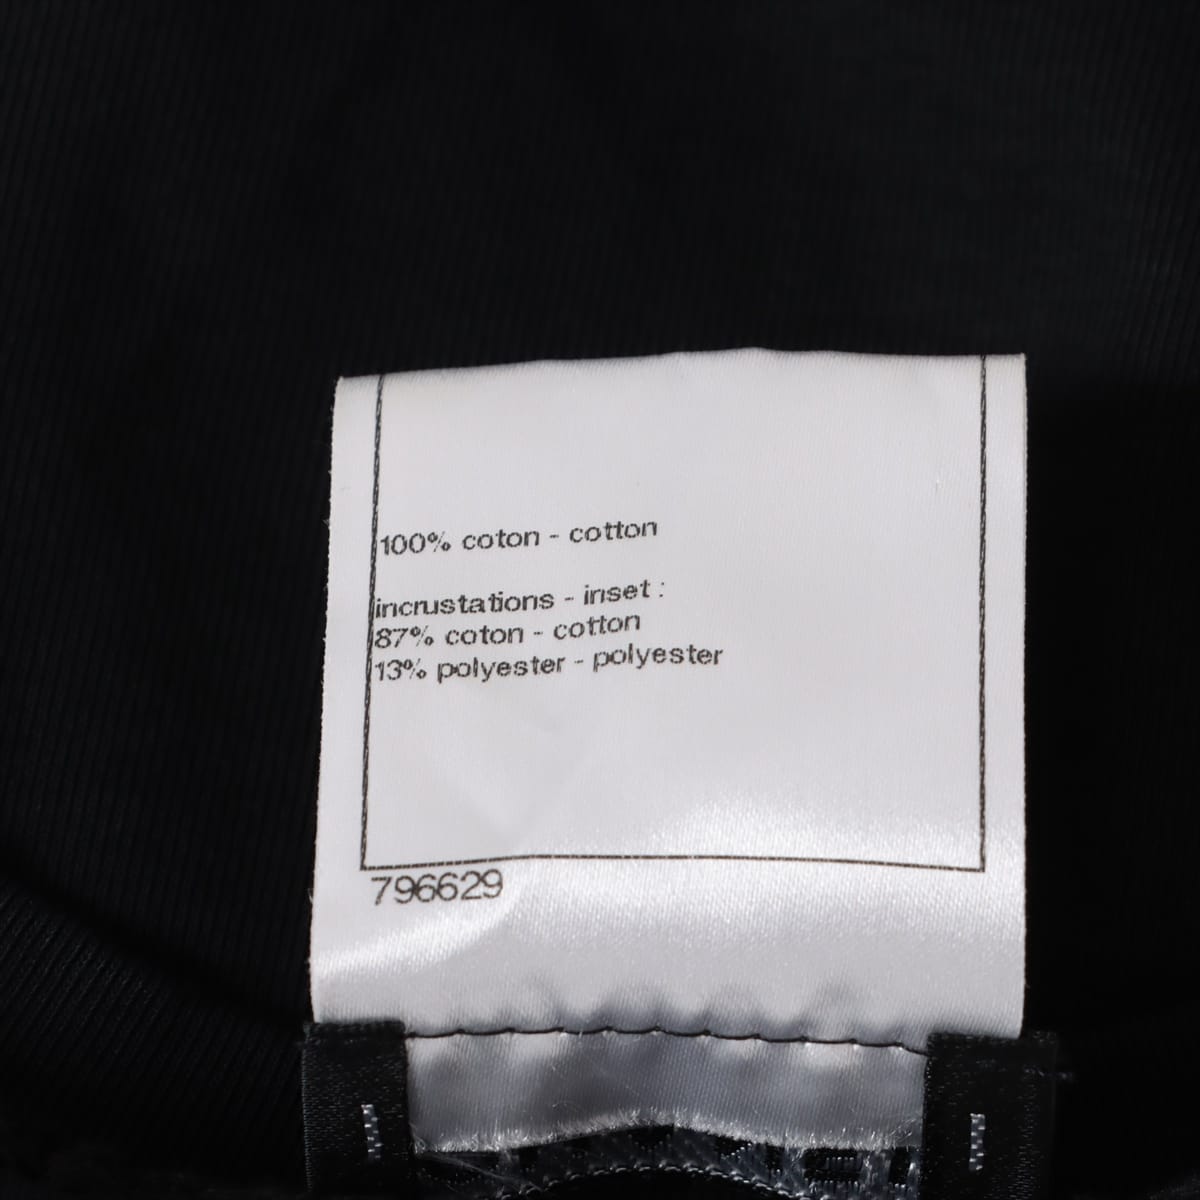 Chanel P41 Cotton & polyester T-shirt 40 Ladies' Black